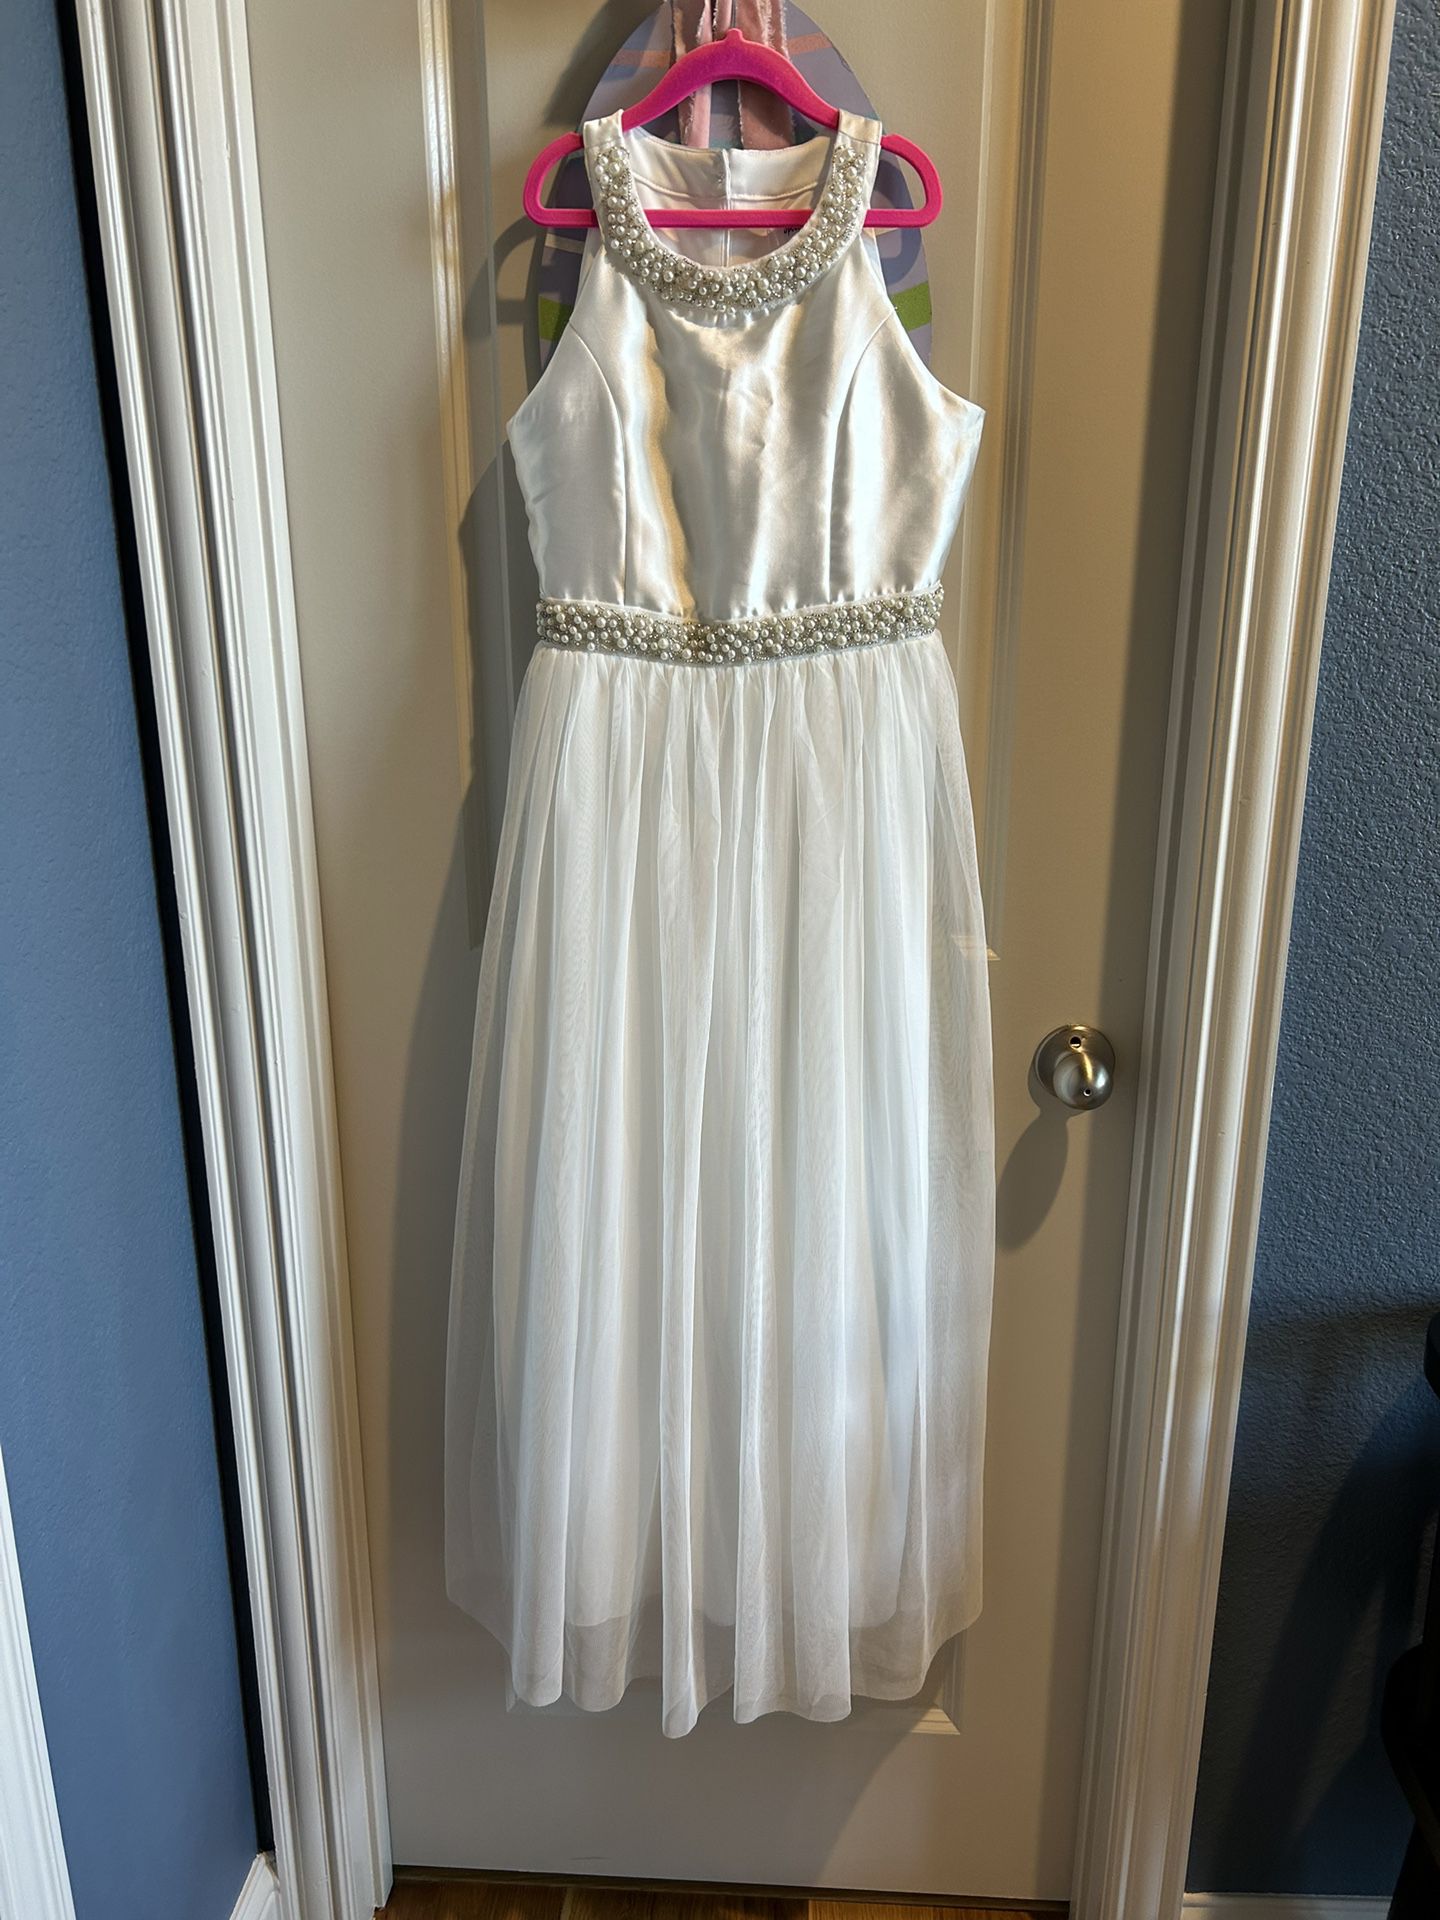 White Easter Or communion Dress 